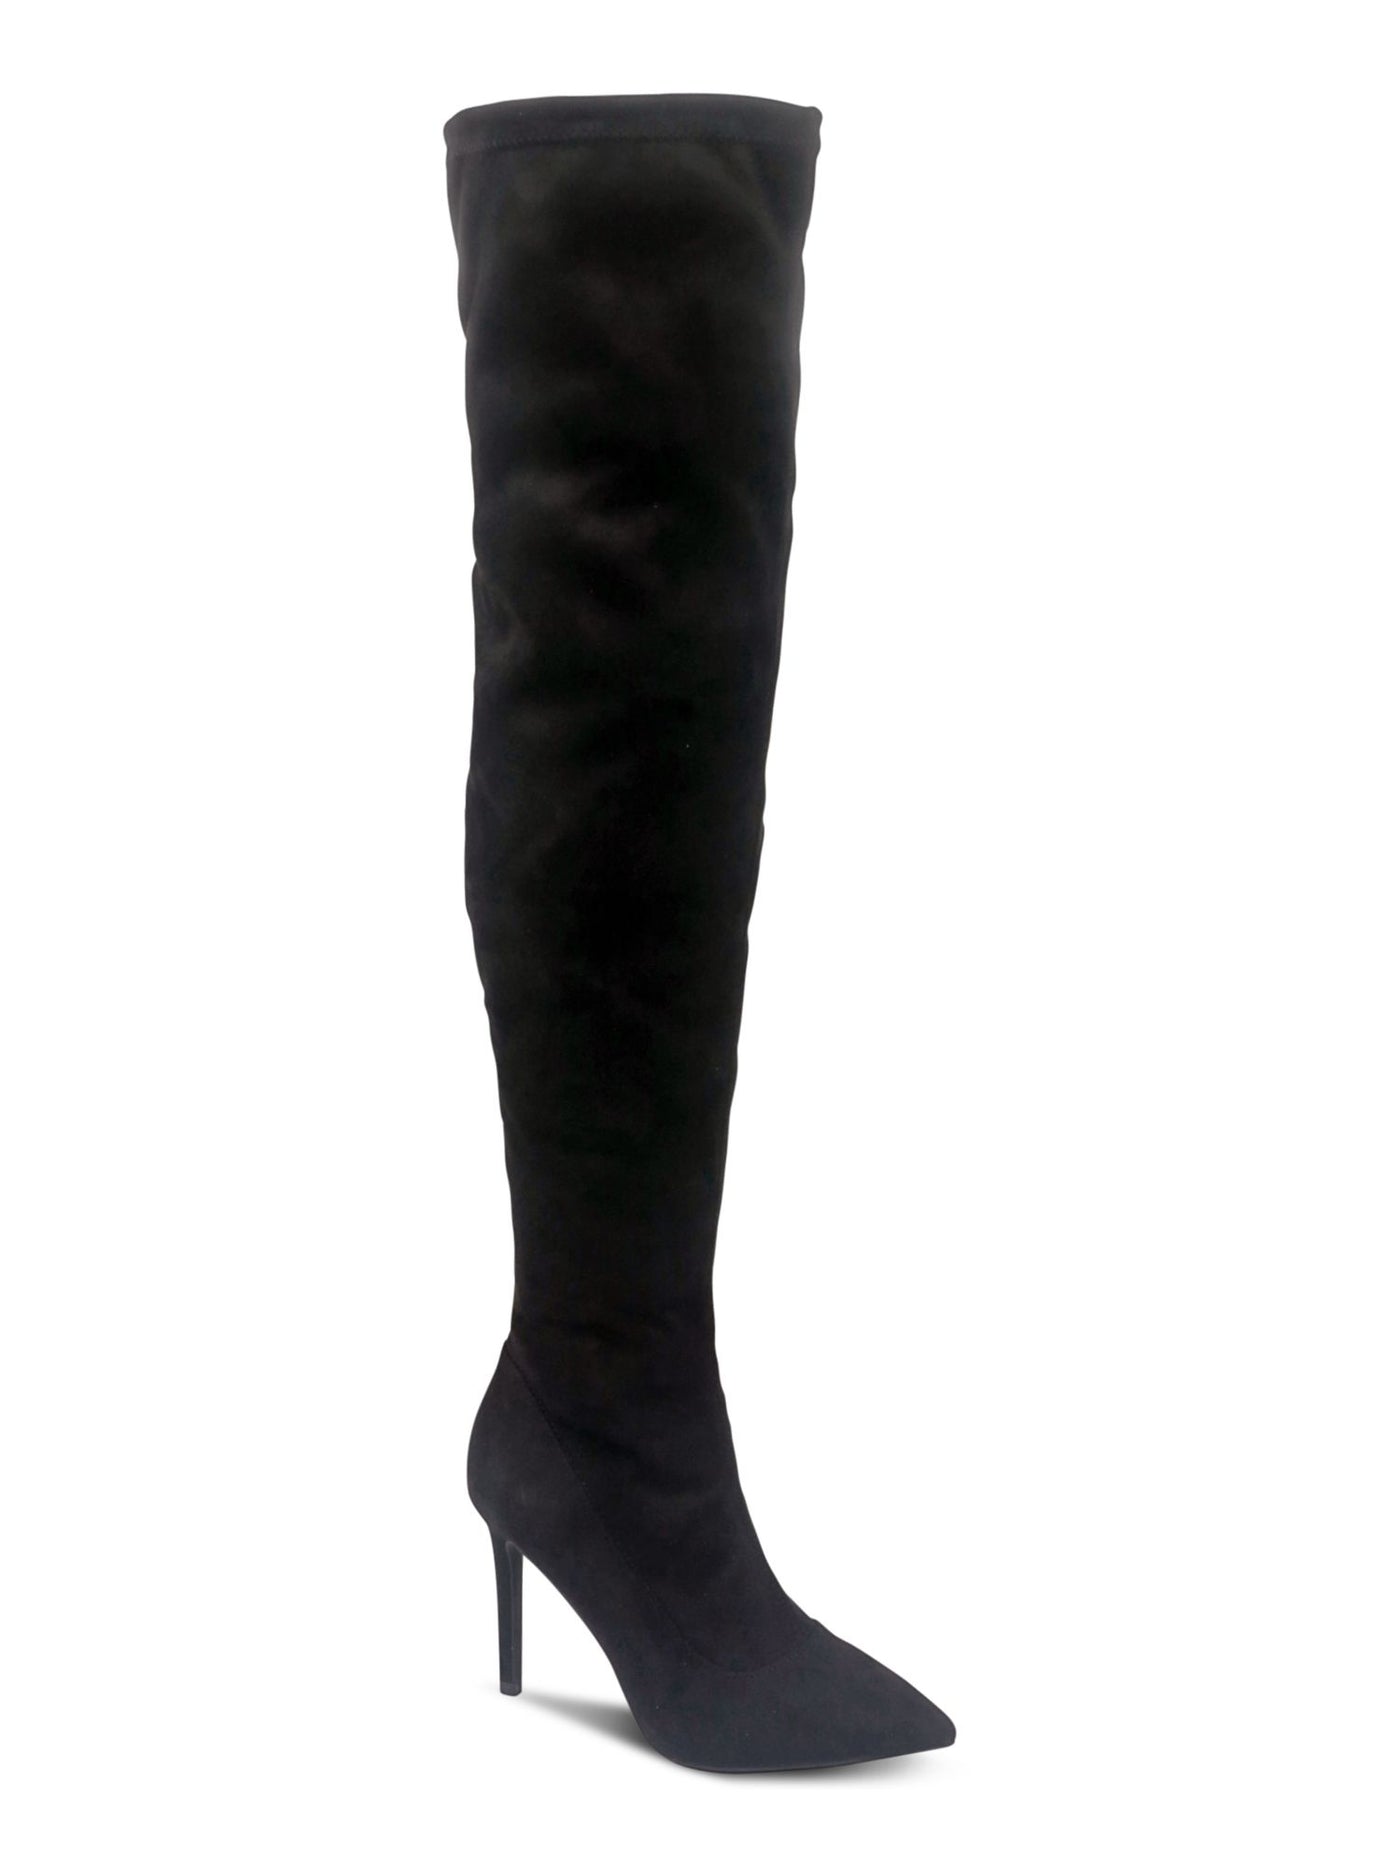 THALIA SODI Womens Black 20 Boot Height Zipper Accent Rominaa Pointed Toe Stiletto Boots 8 M